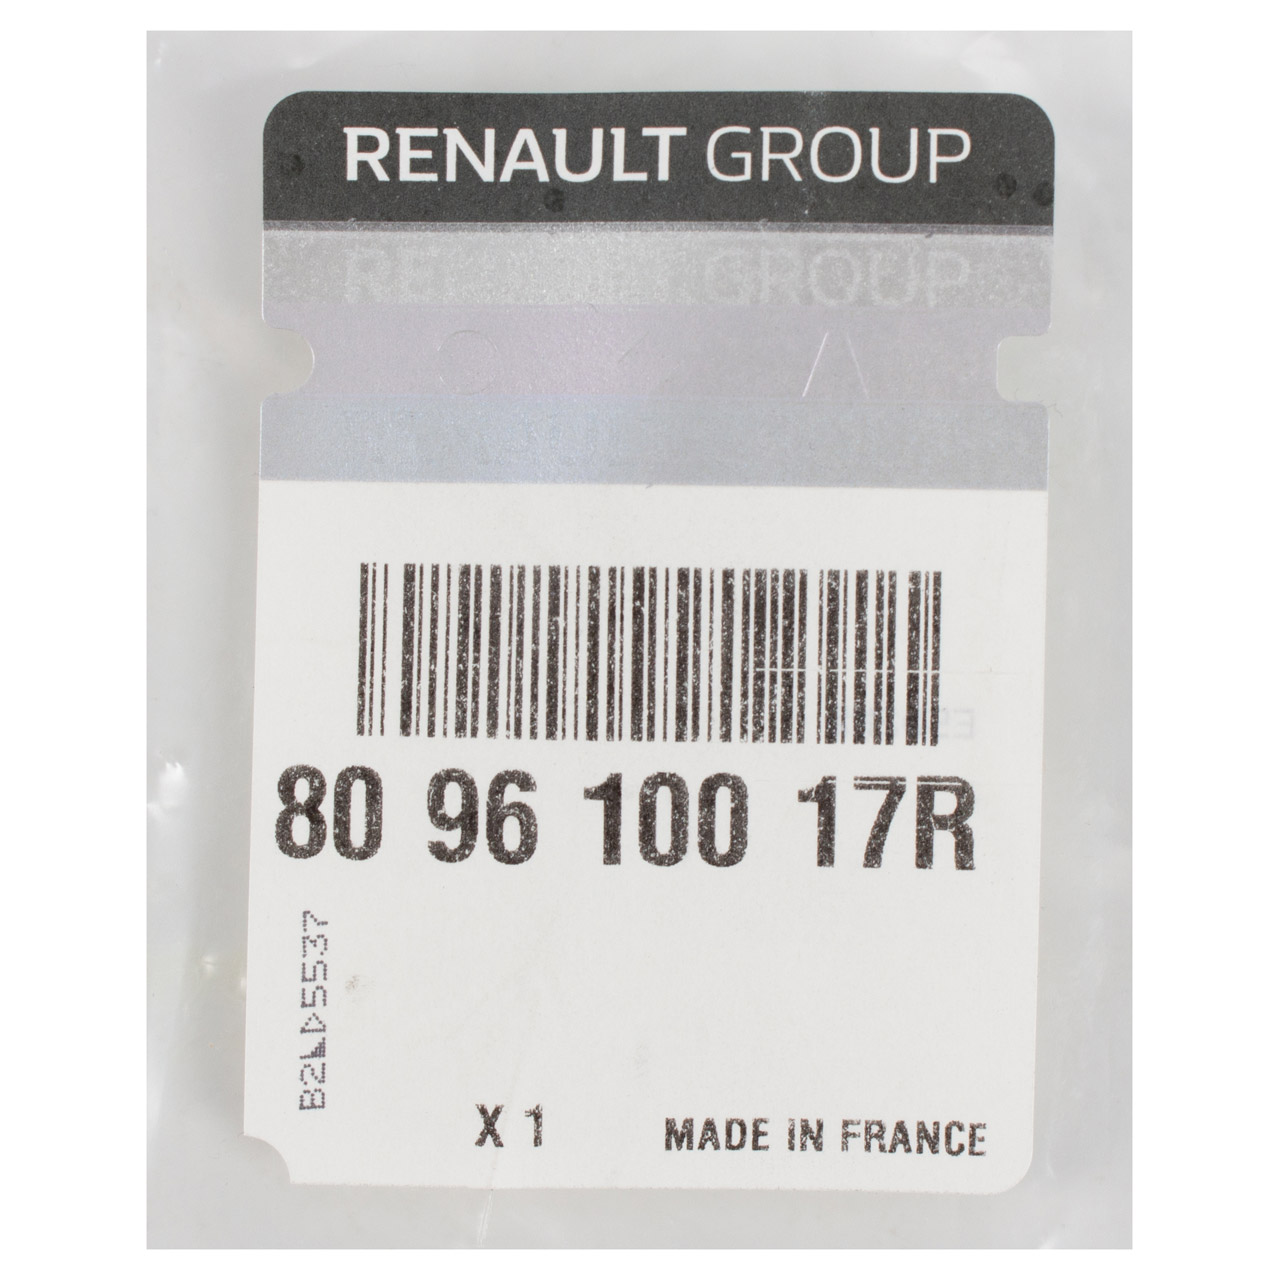 ORIGINAL Renault Fensterheber Fahrertür Megane 3 Scenic 3 vorne links 809610017R